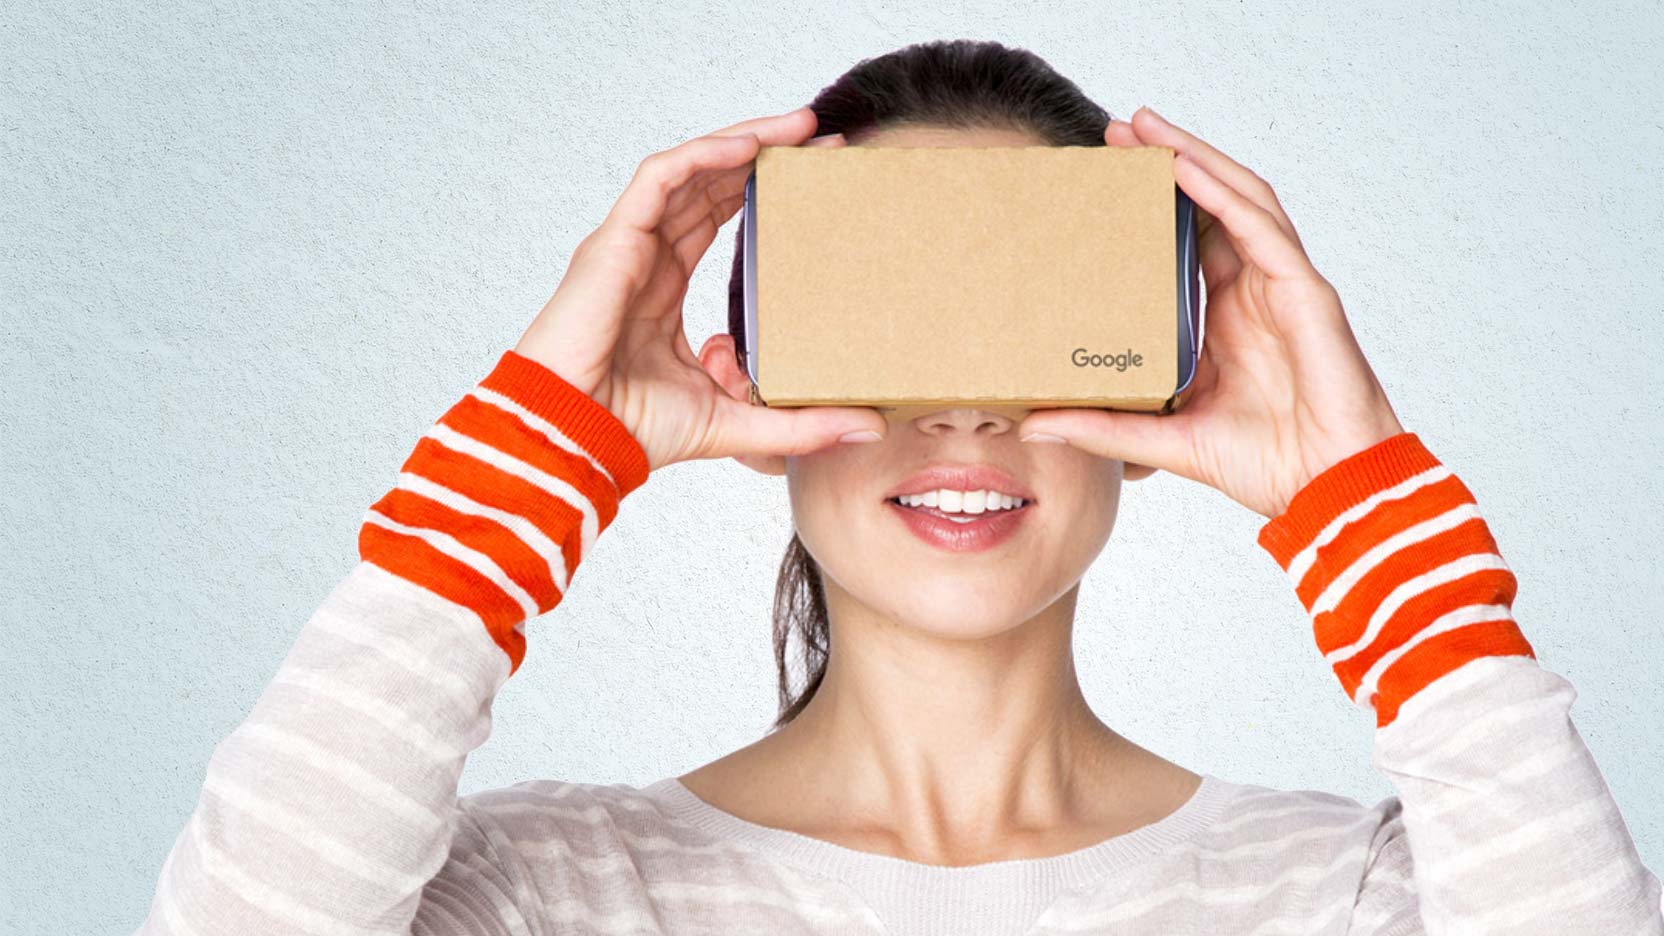 Best VR Headsets: Google Cardboard